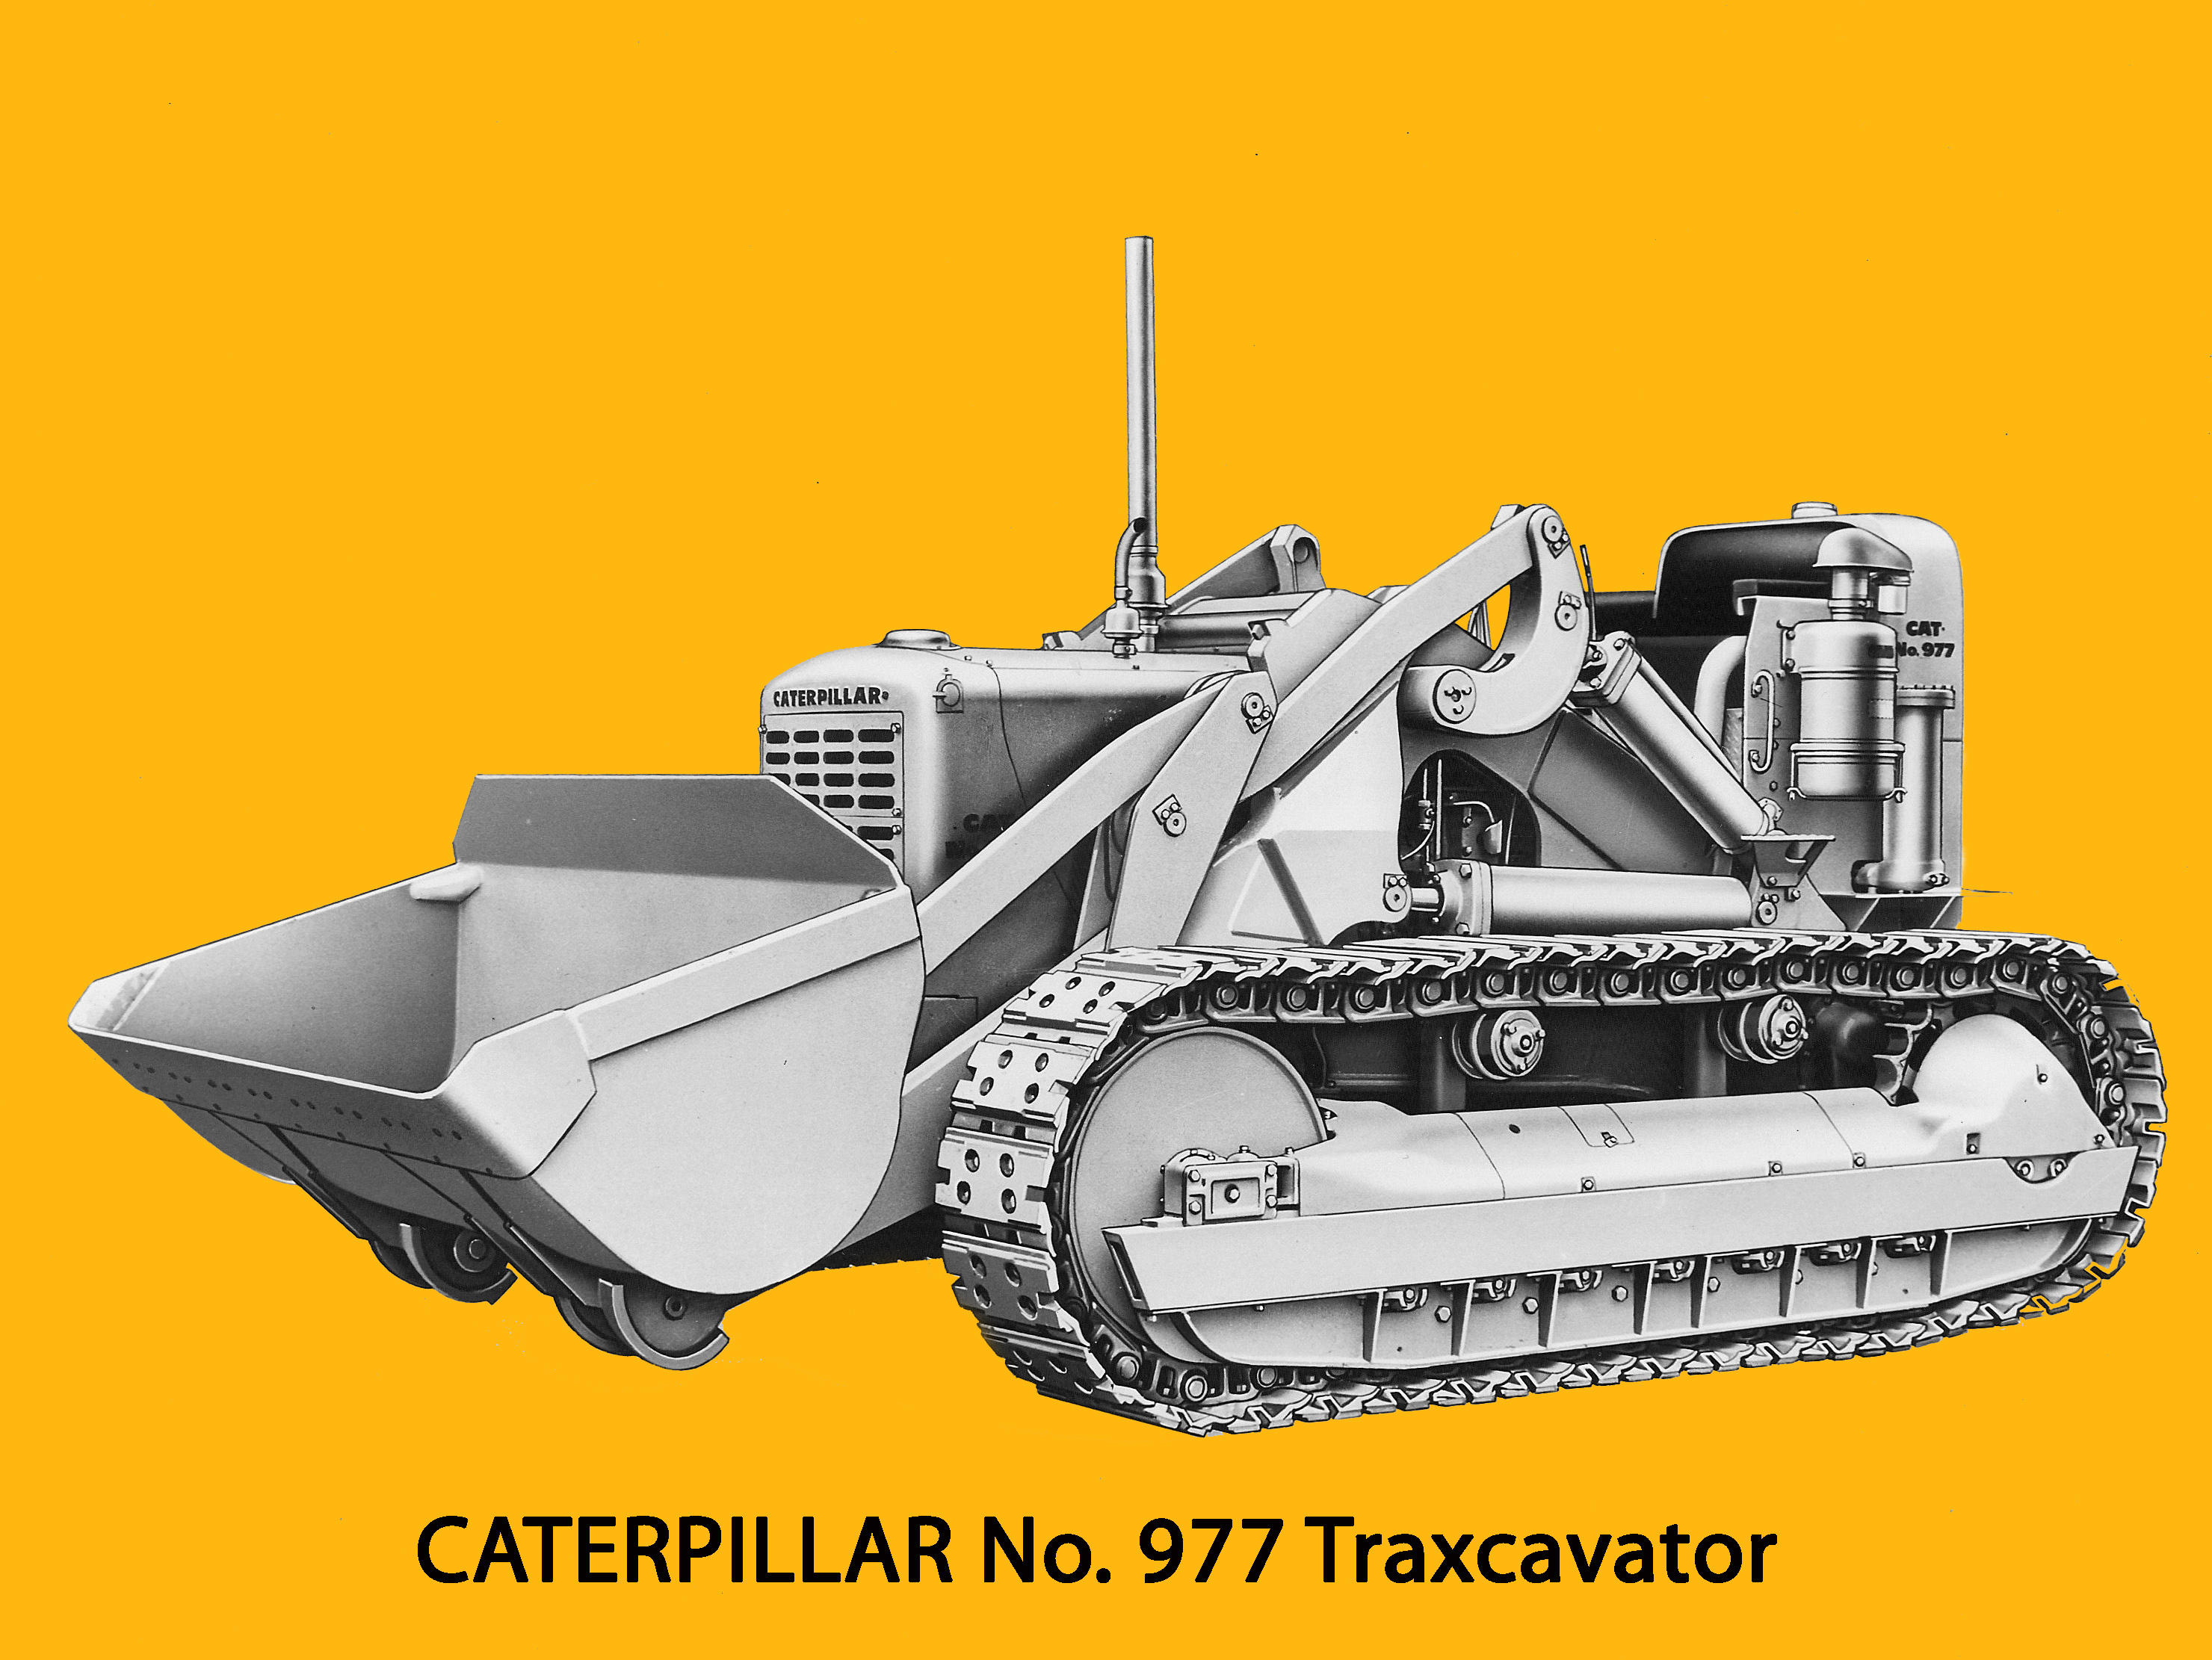 Traxcavator  macchine Caterpillar-model-977-traxcavator-loader-edgar-browning-image